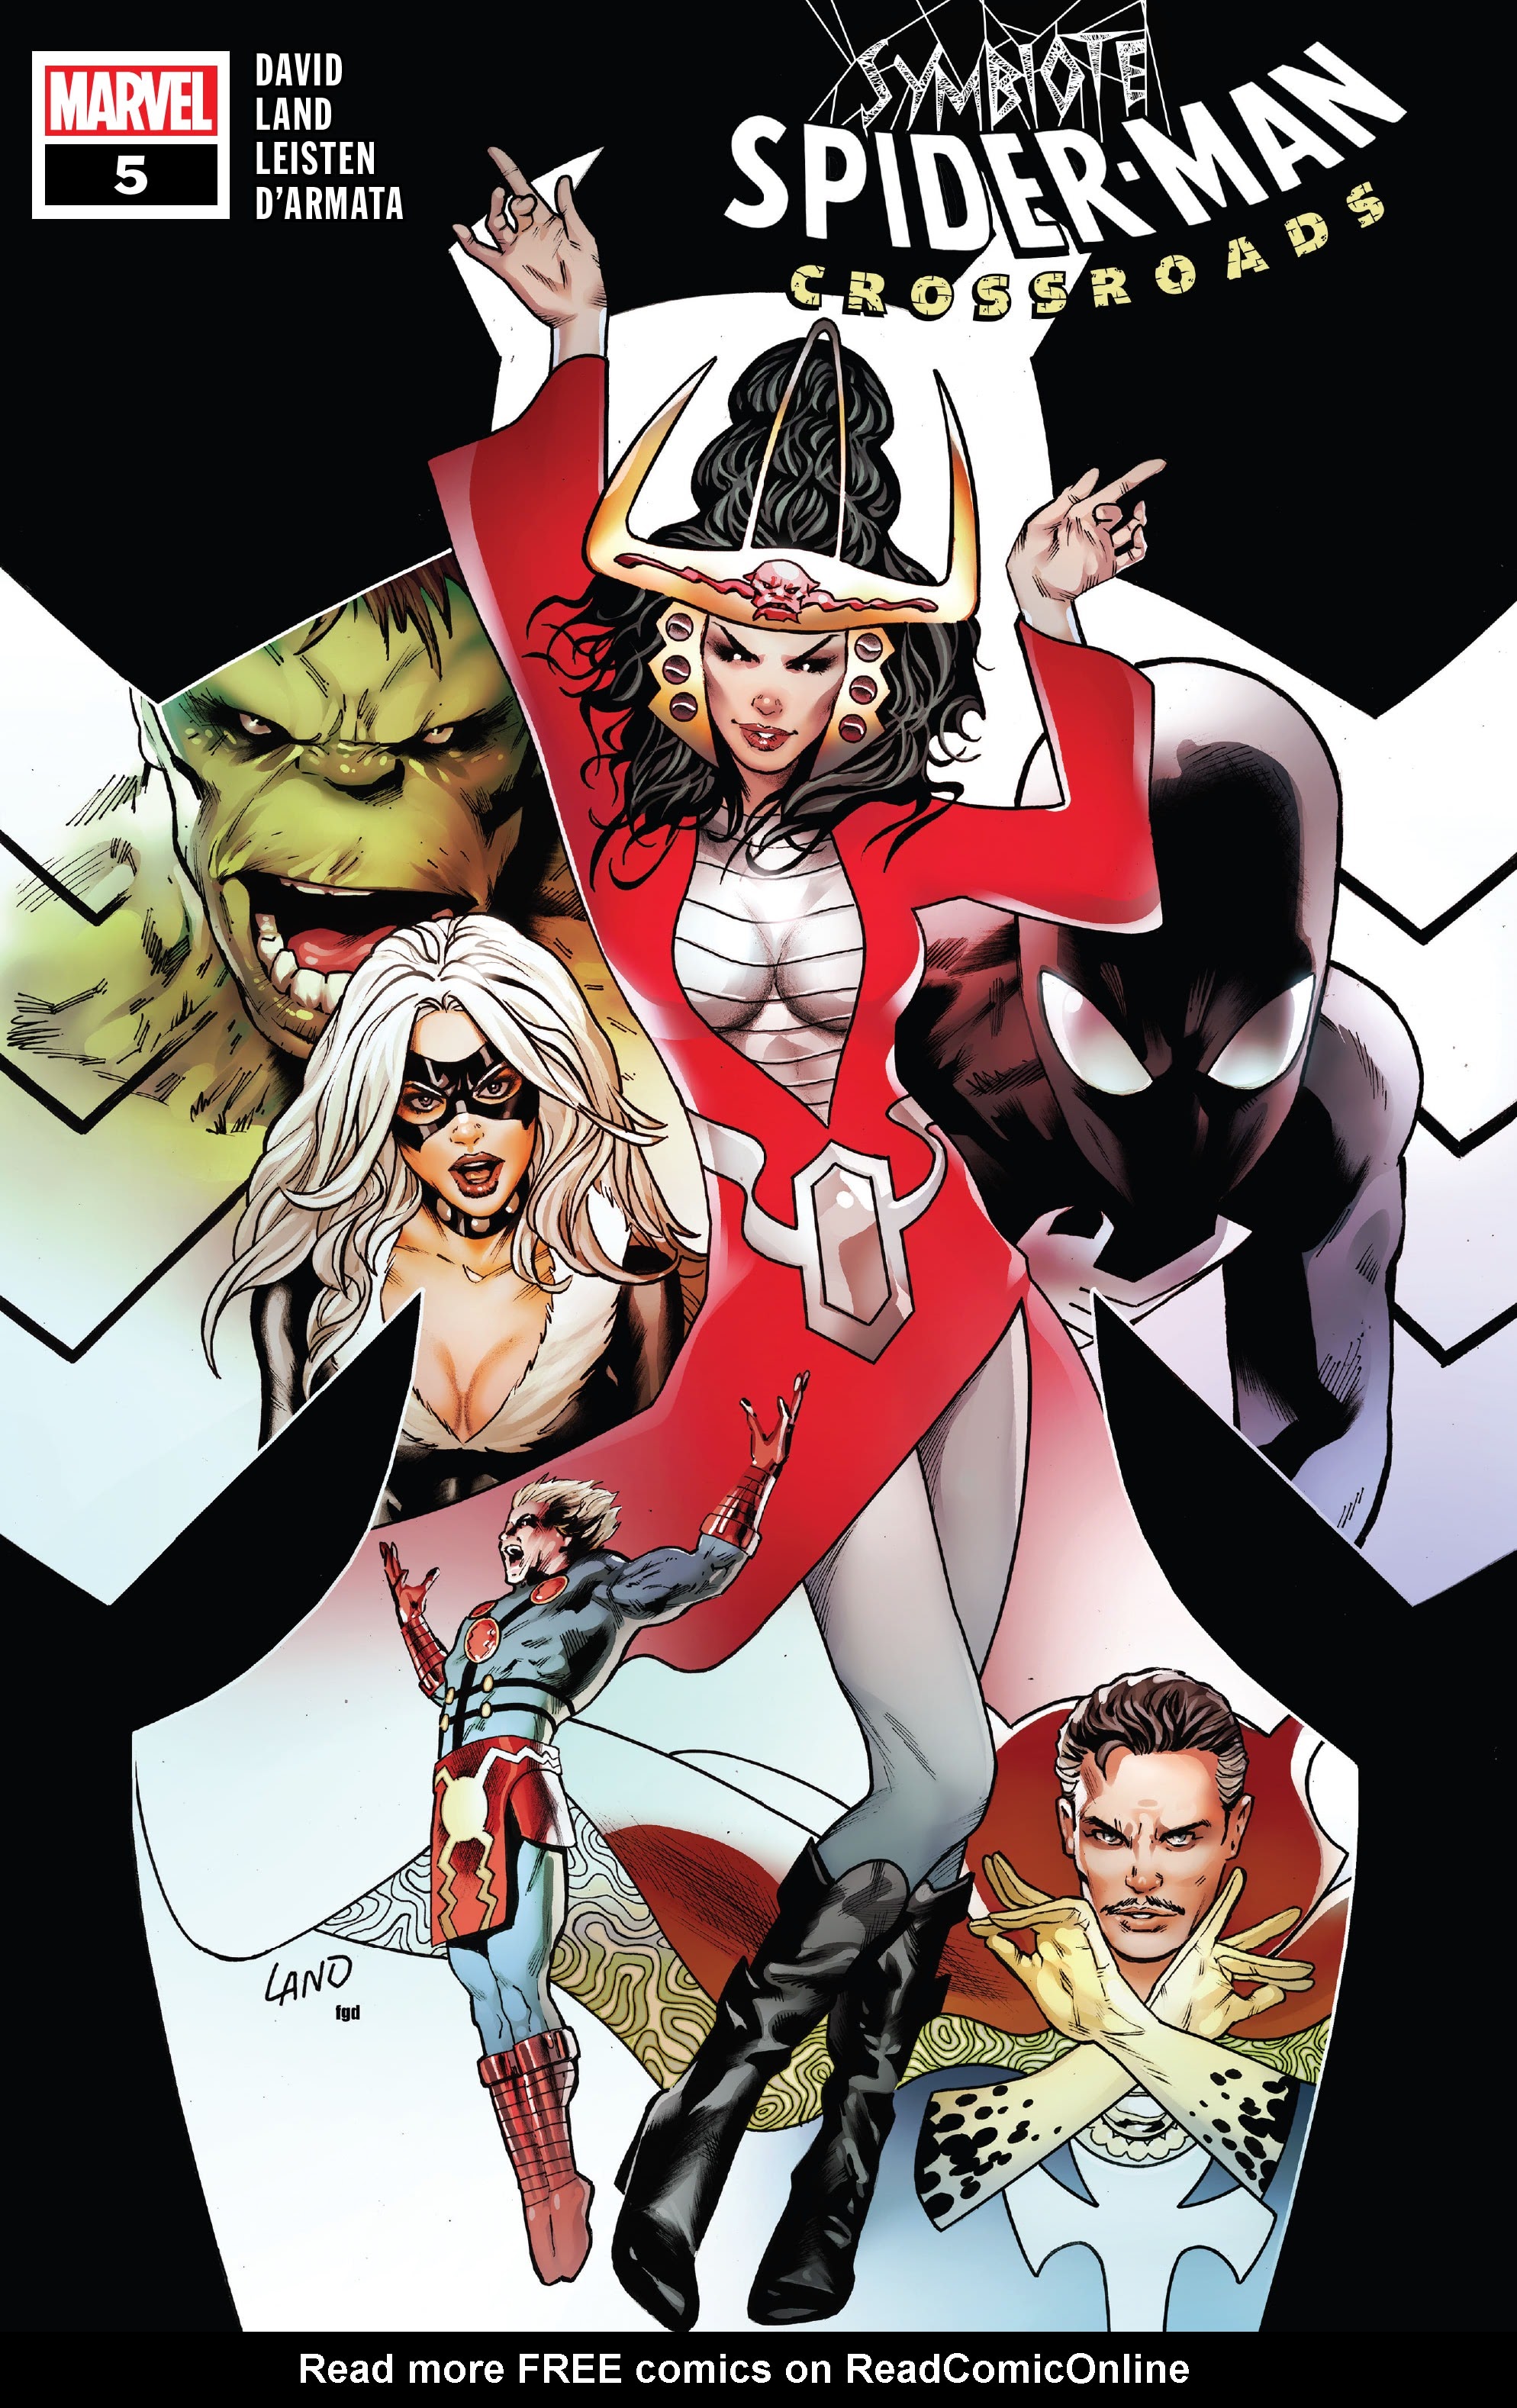 Read online Symbiote Spider-Man: Crossroads comic -  Issue #5 - 1